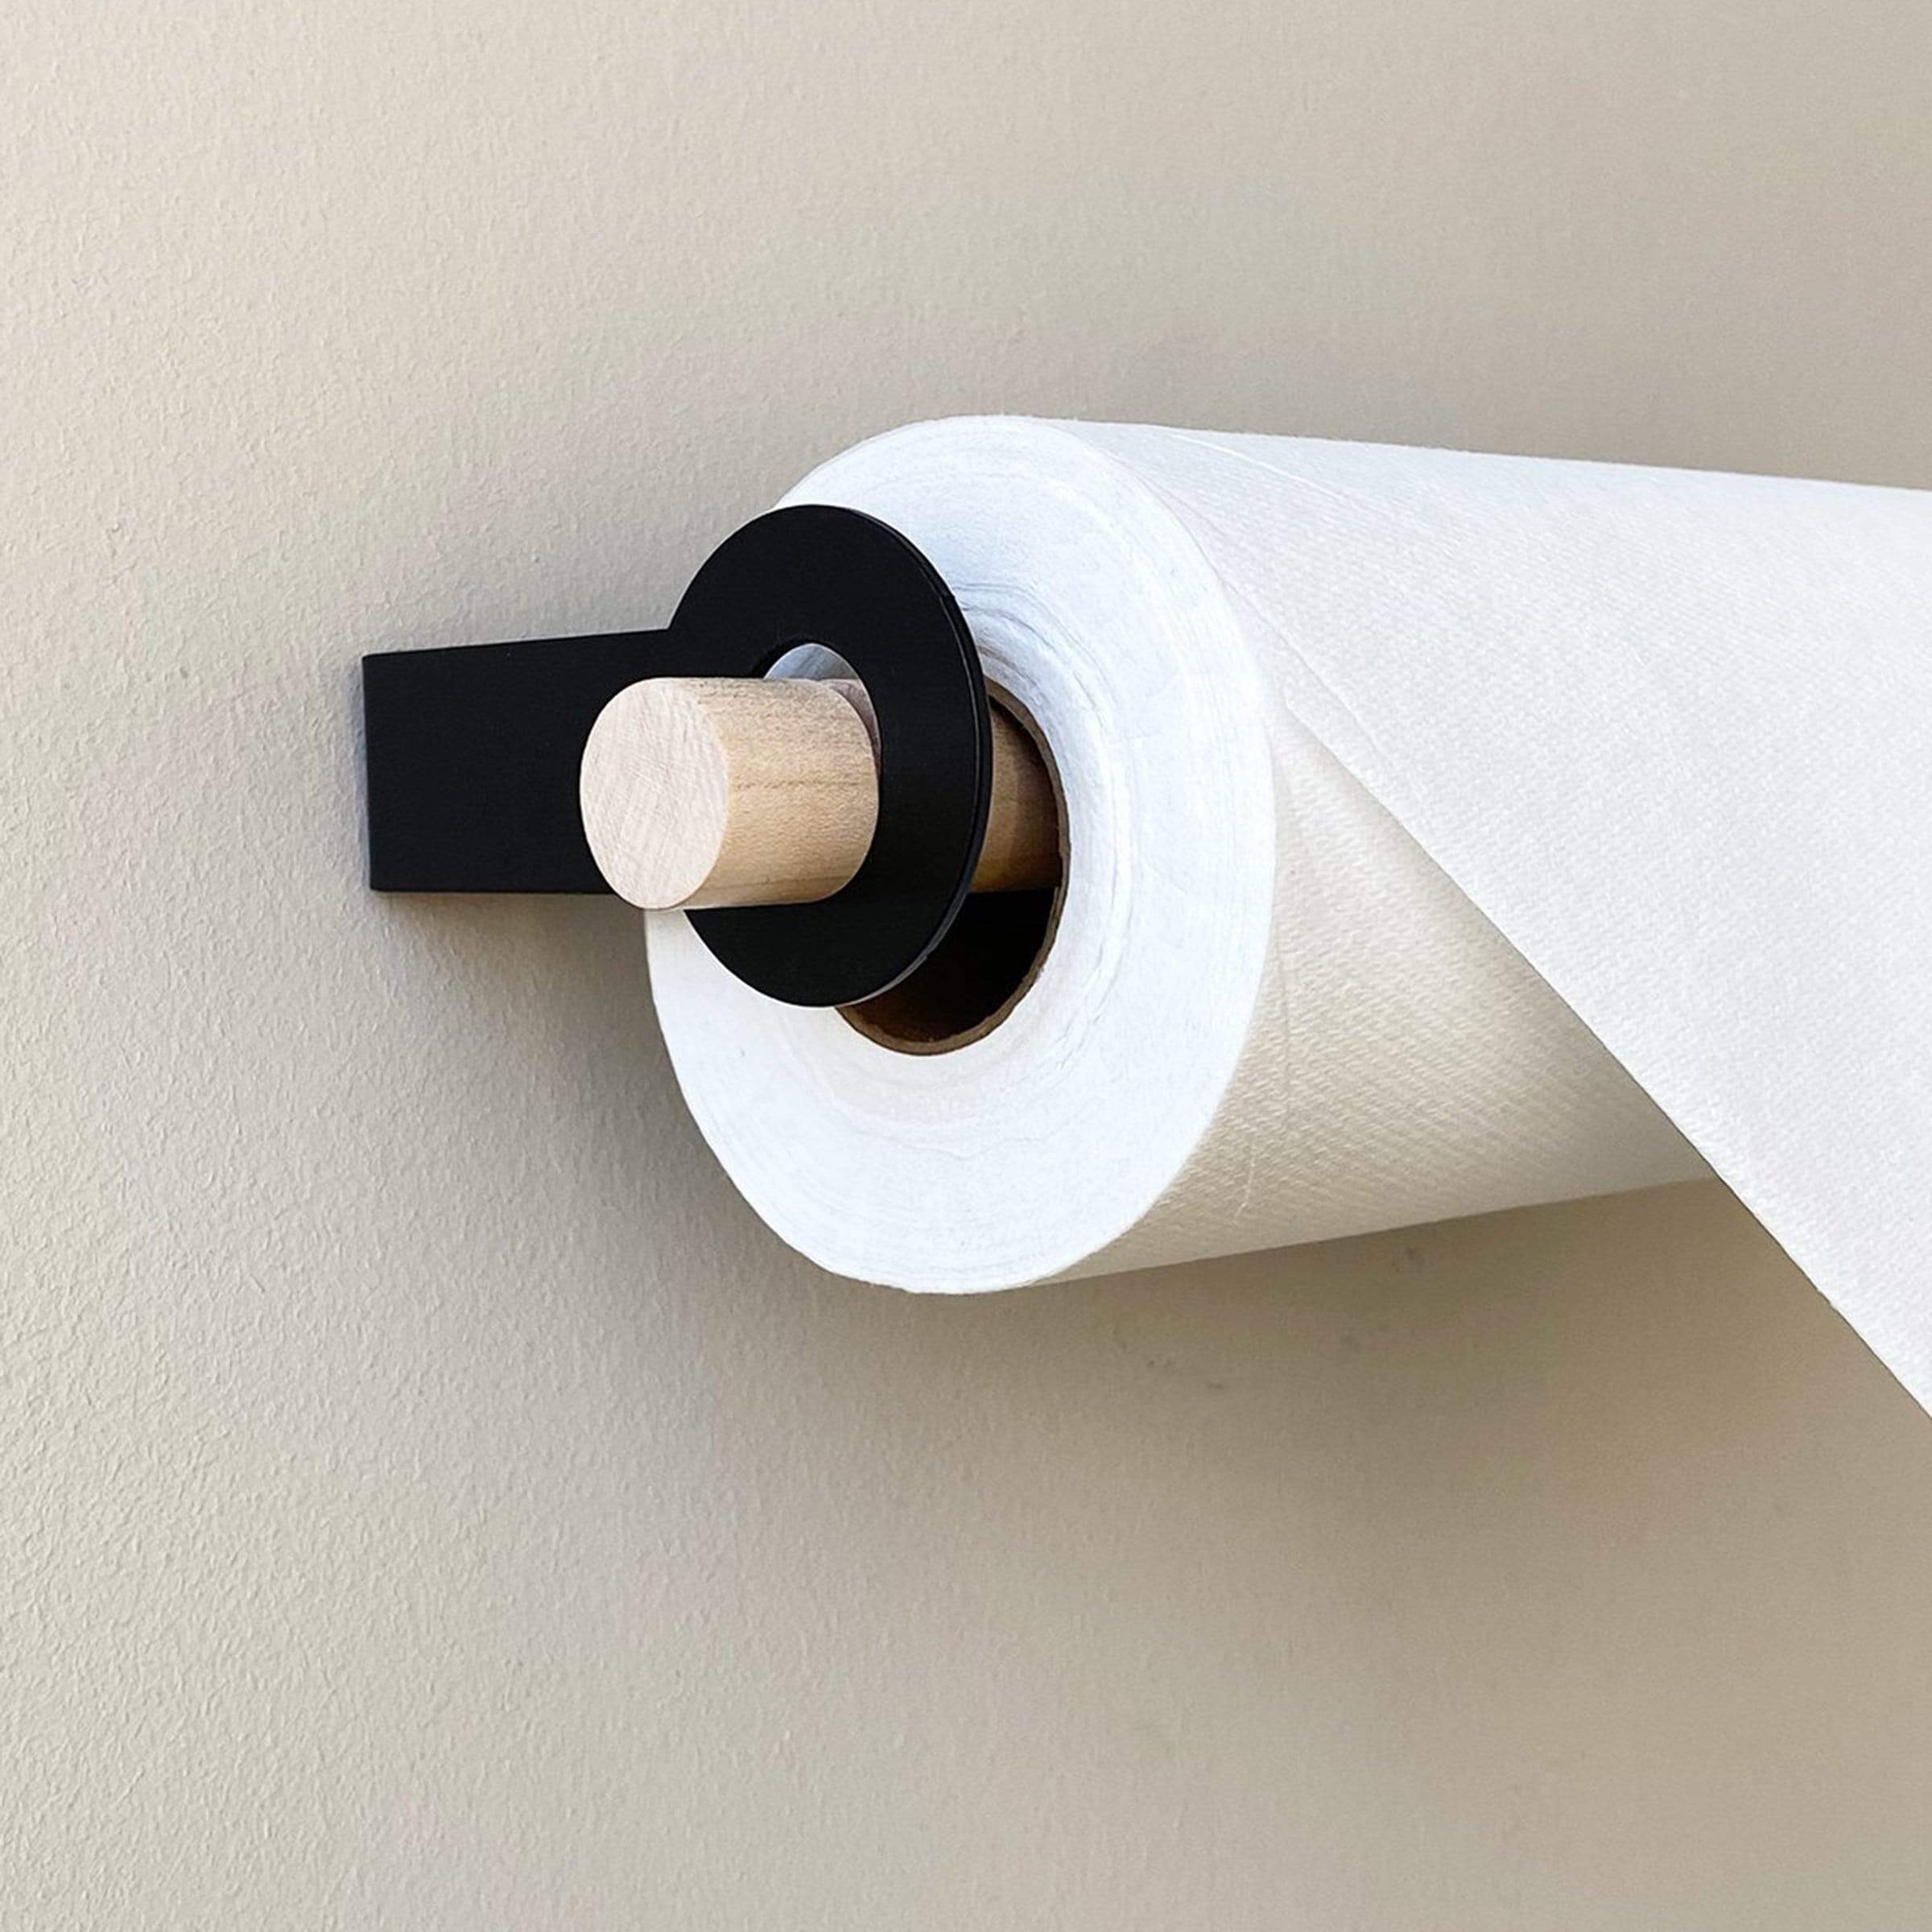 Red Barrel Studio® Metal Free-Standing Paper Towel Holder